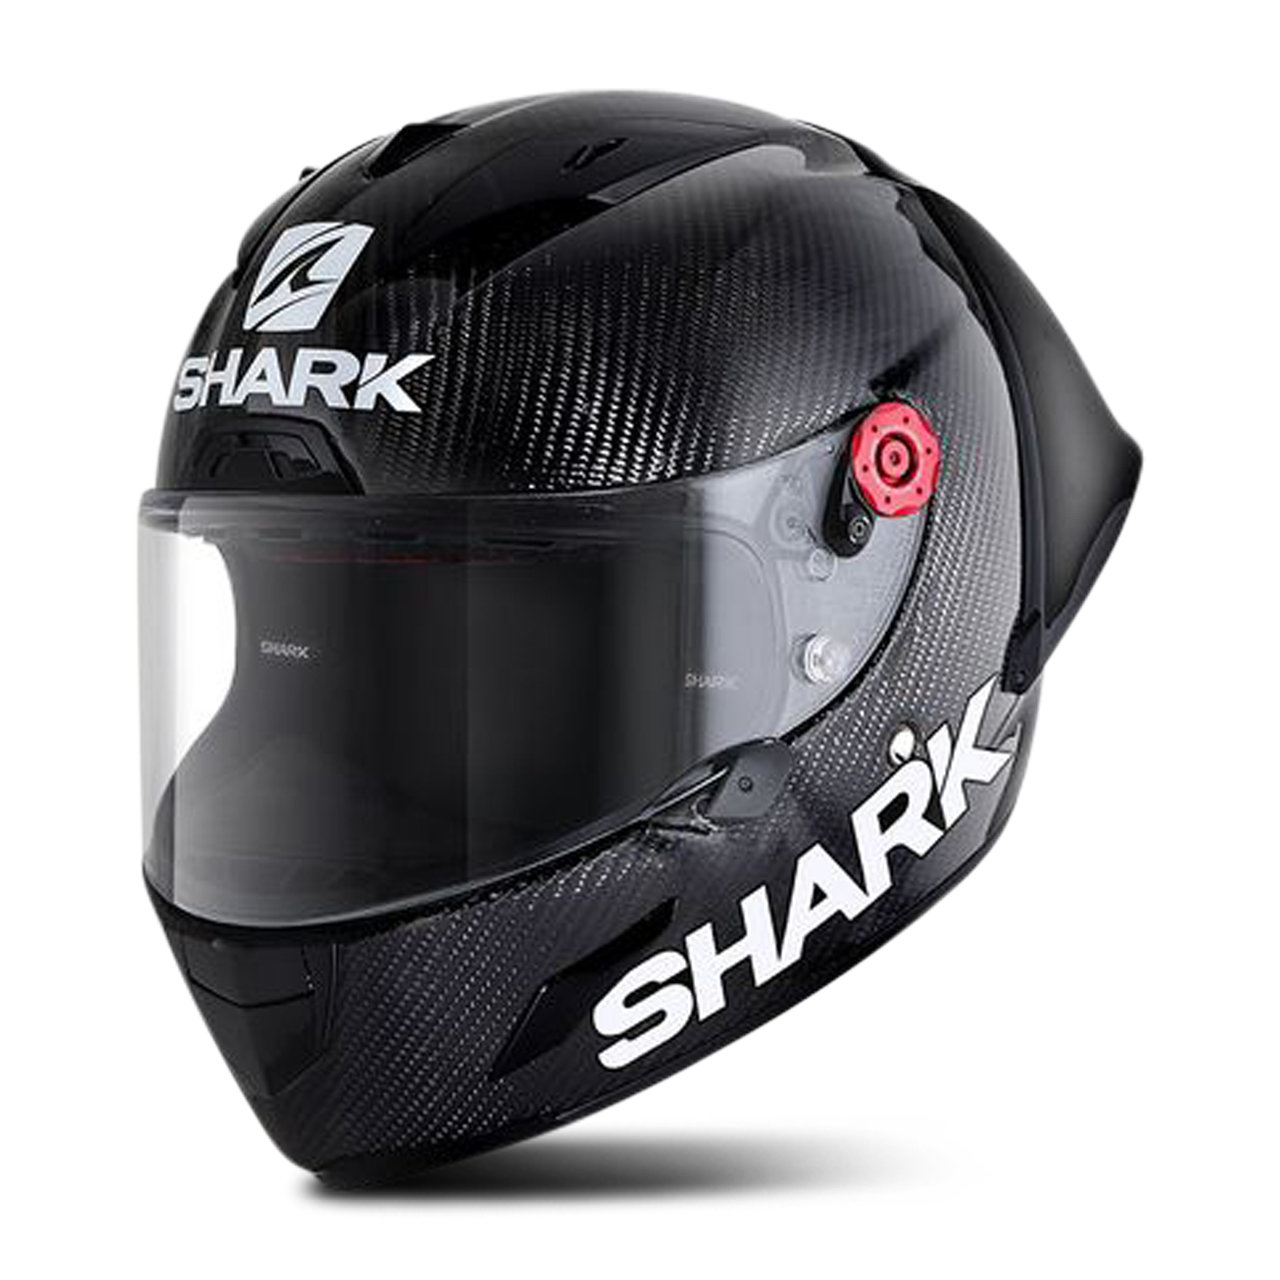 Shark Casco Integral  Race-R Pro GP Fim Racing #1 2019 Carbono-Negro